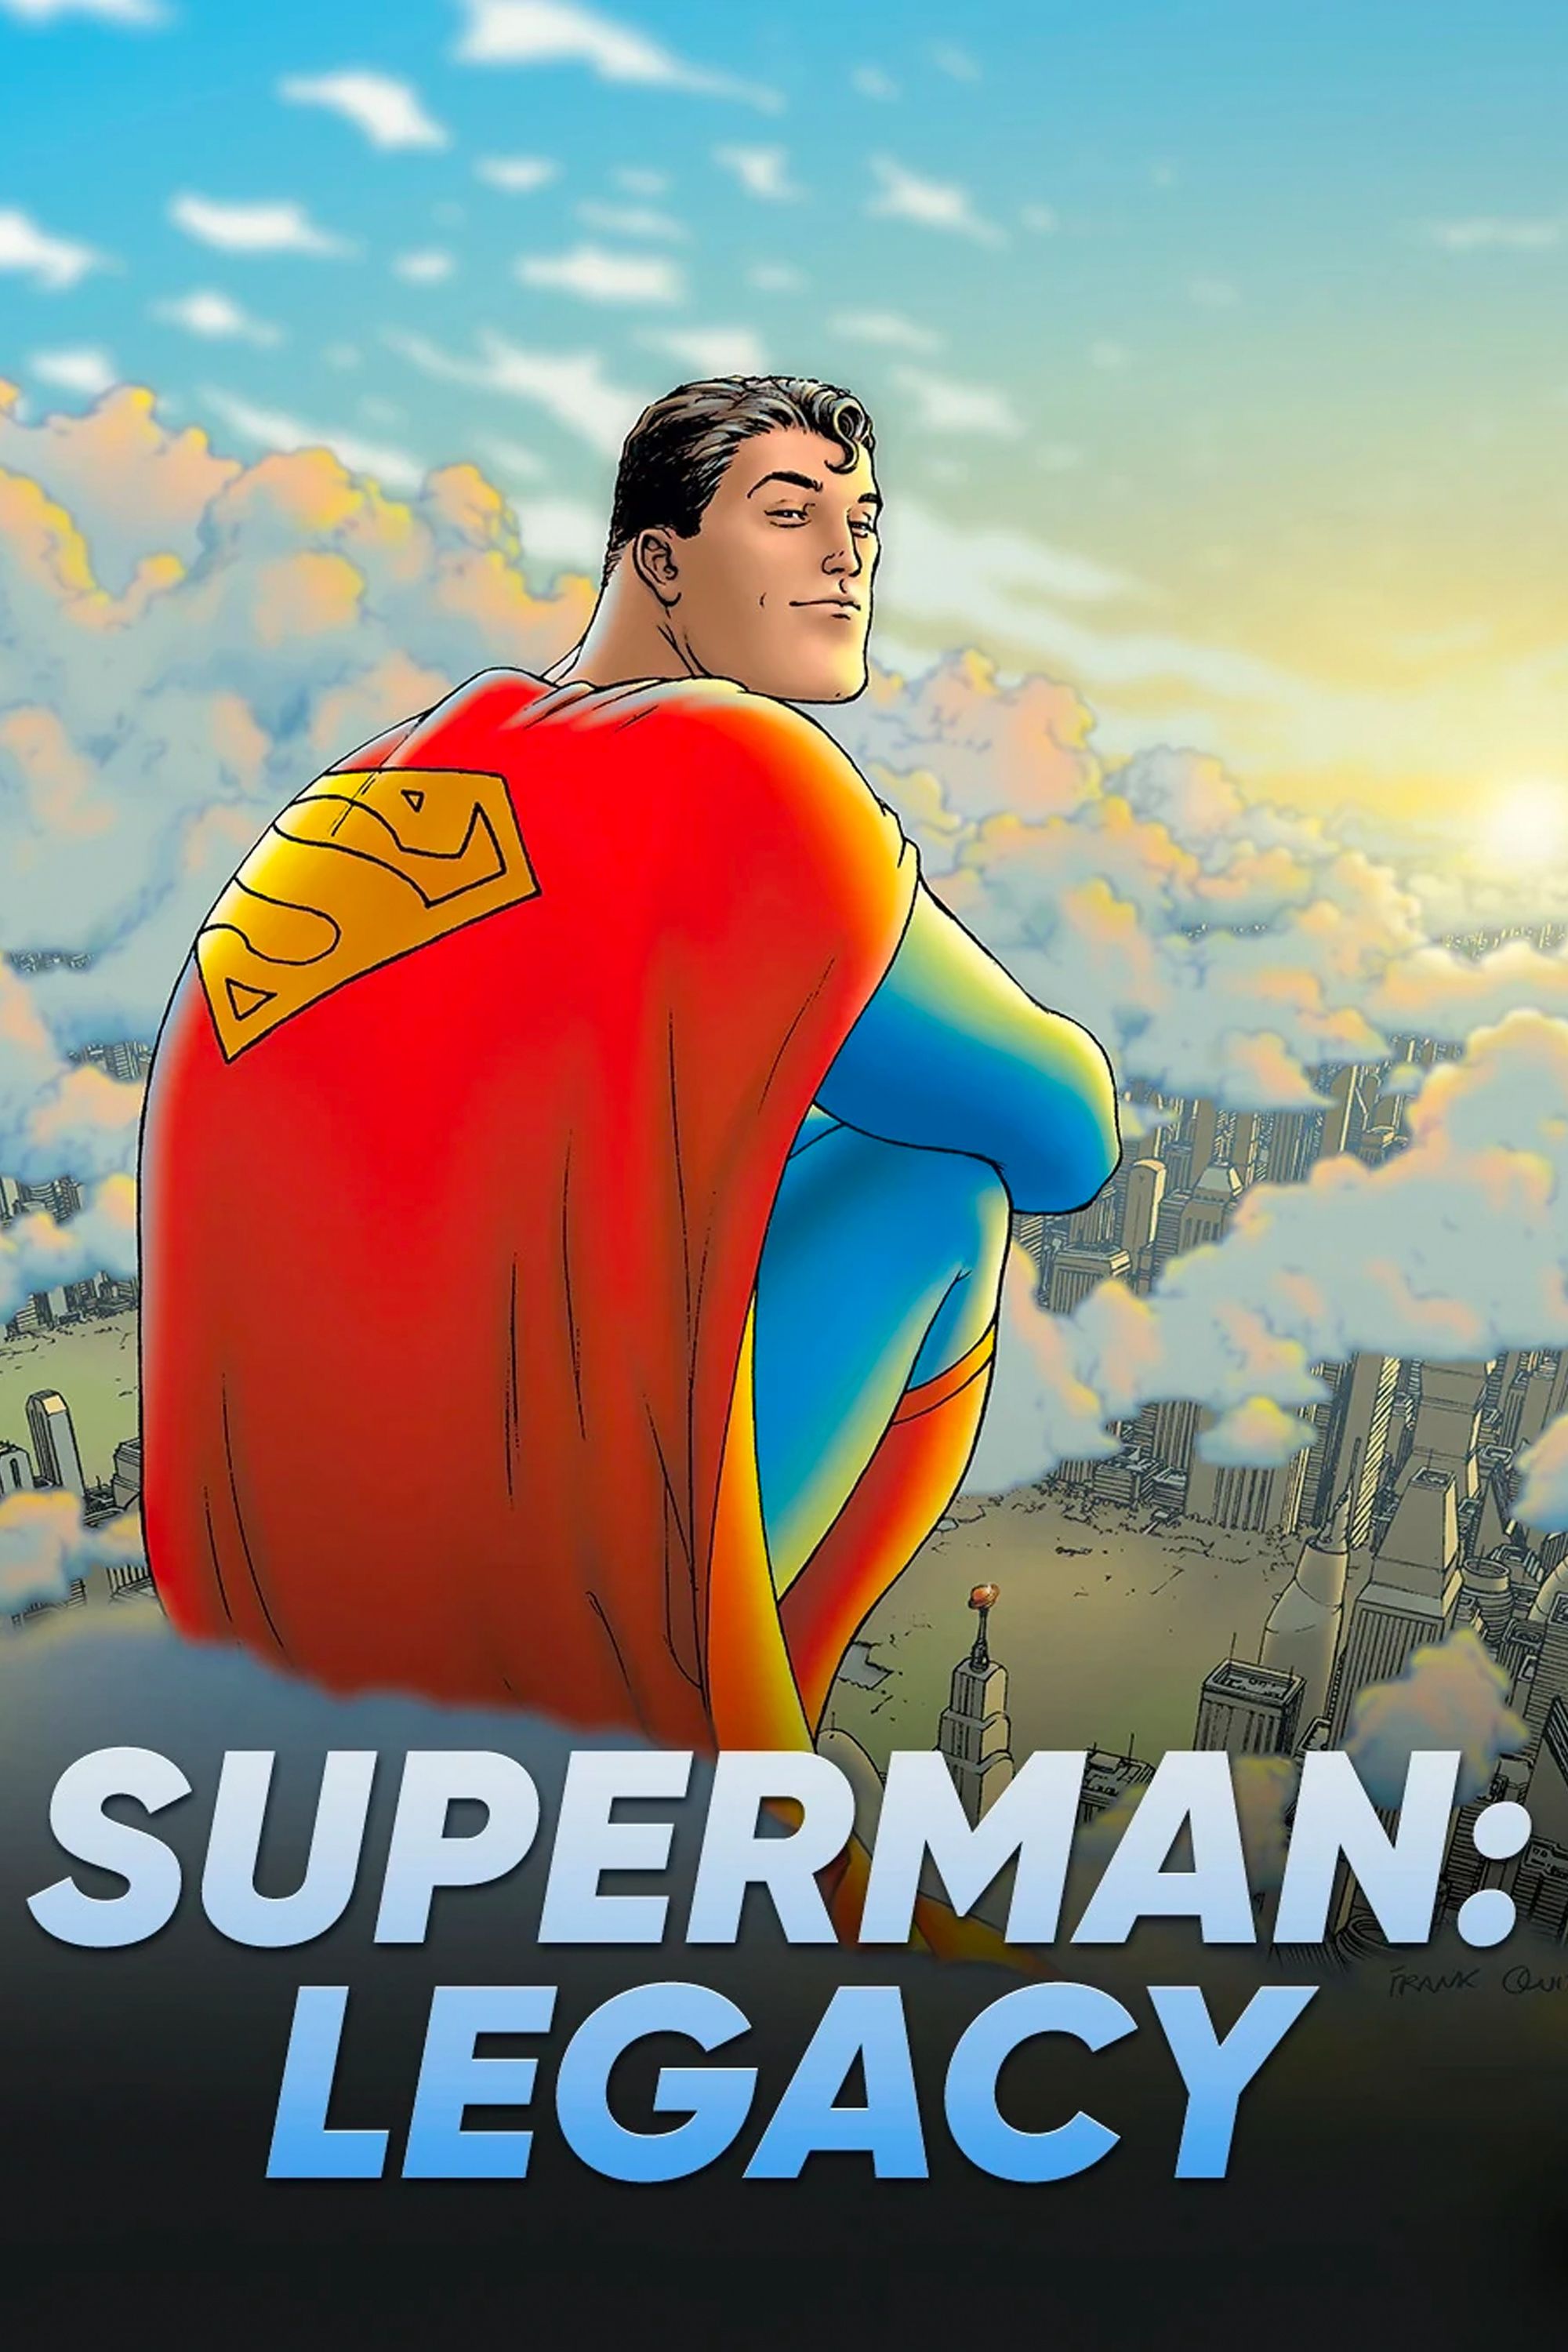 Superman Movie Logo Details Revealed As James Gunn Hypes 